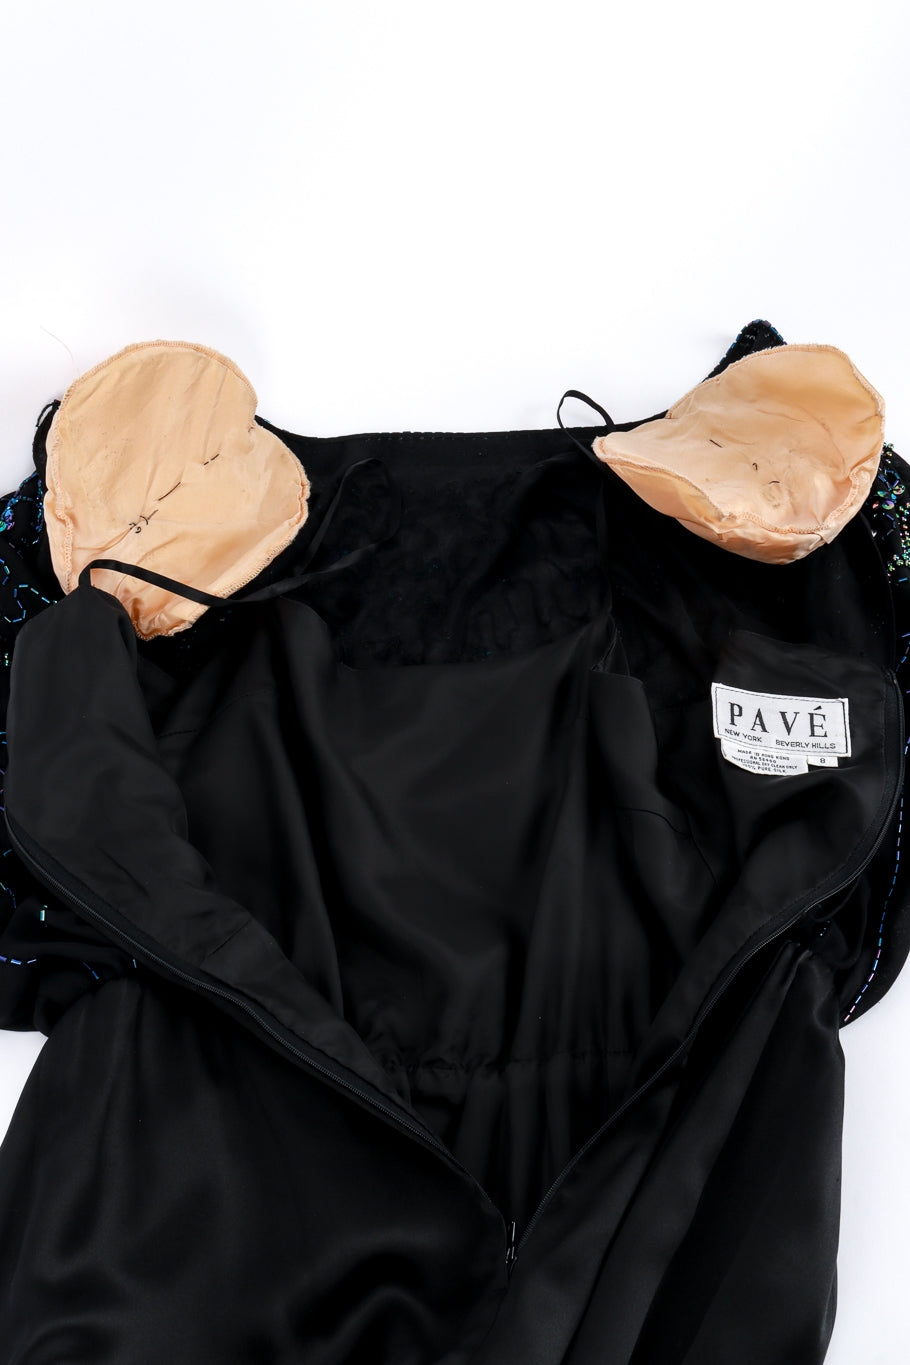 Vintage Pave Beaded Fringe Silk Dress back unzipped @recess la